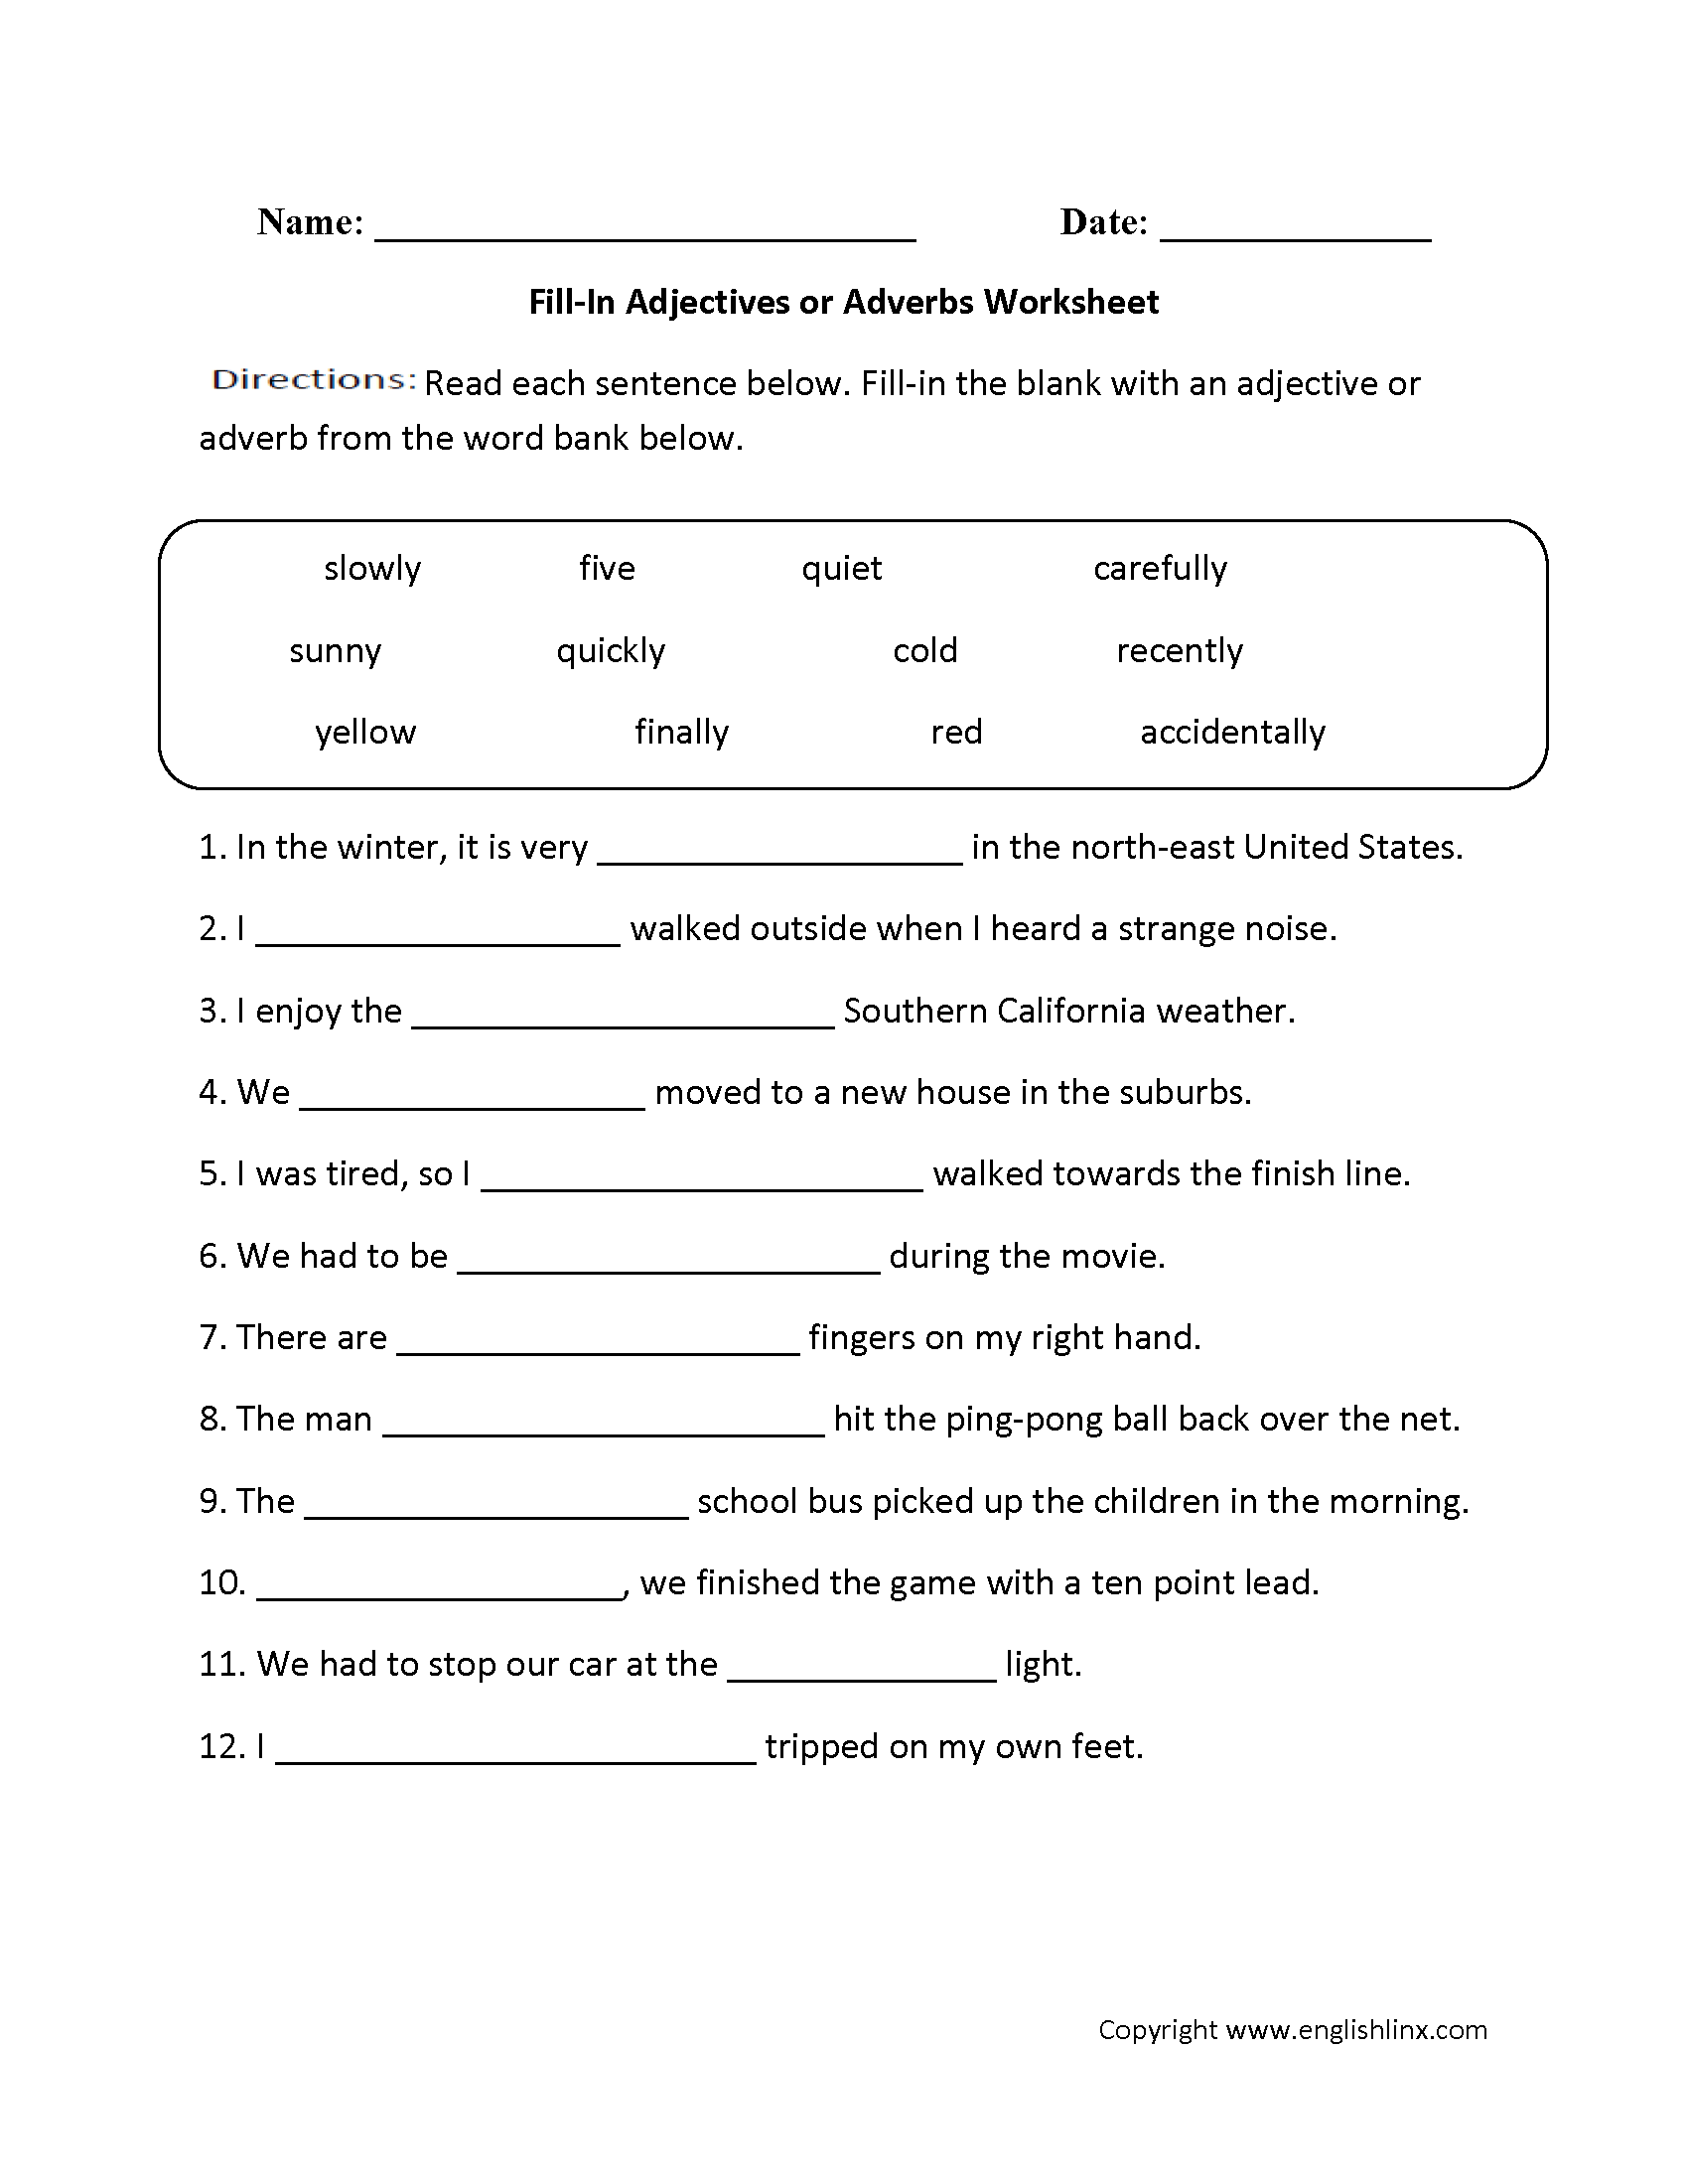 Adjective Worksheet For Seventh Grade - adjective worksheets for 7th